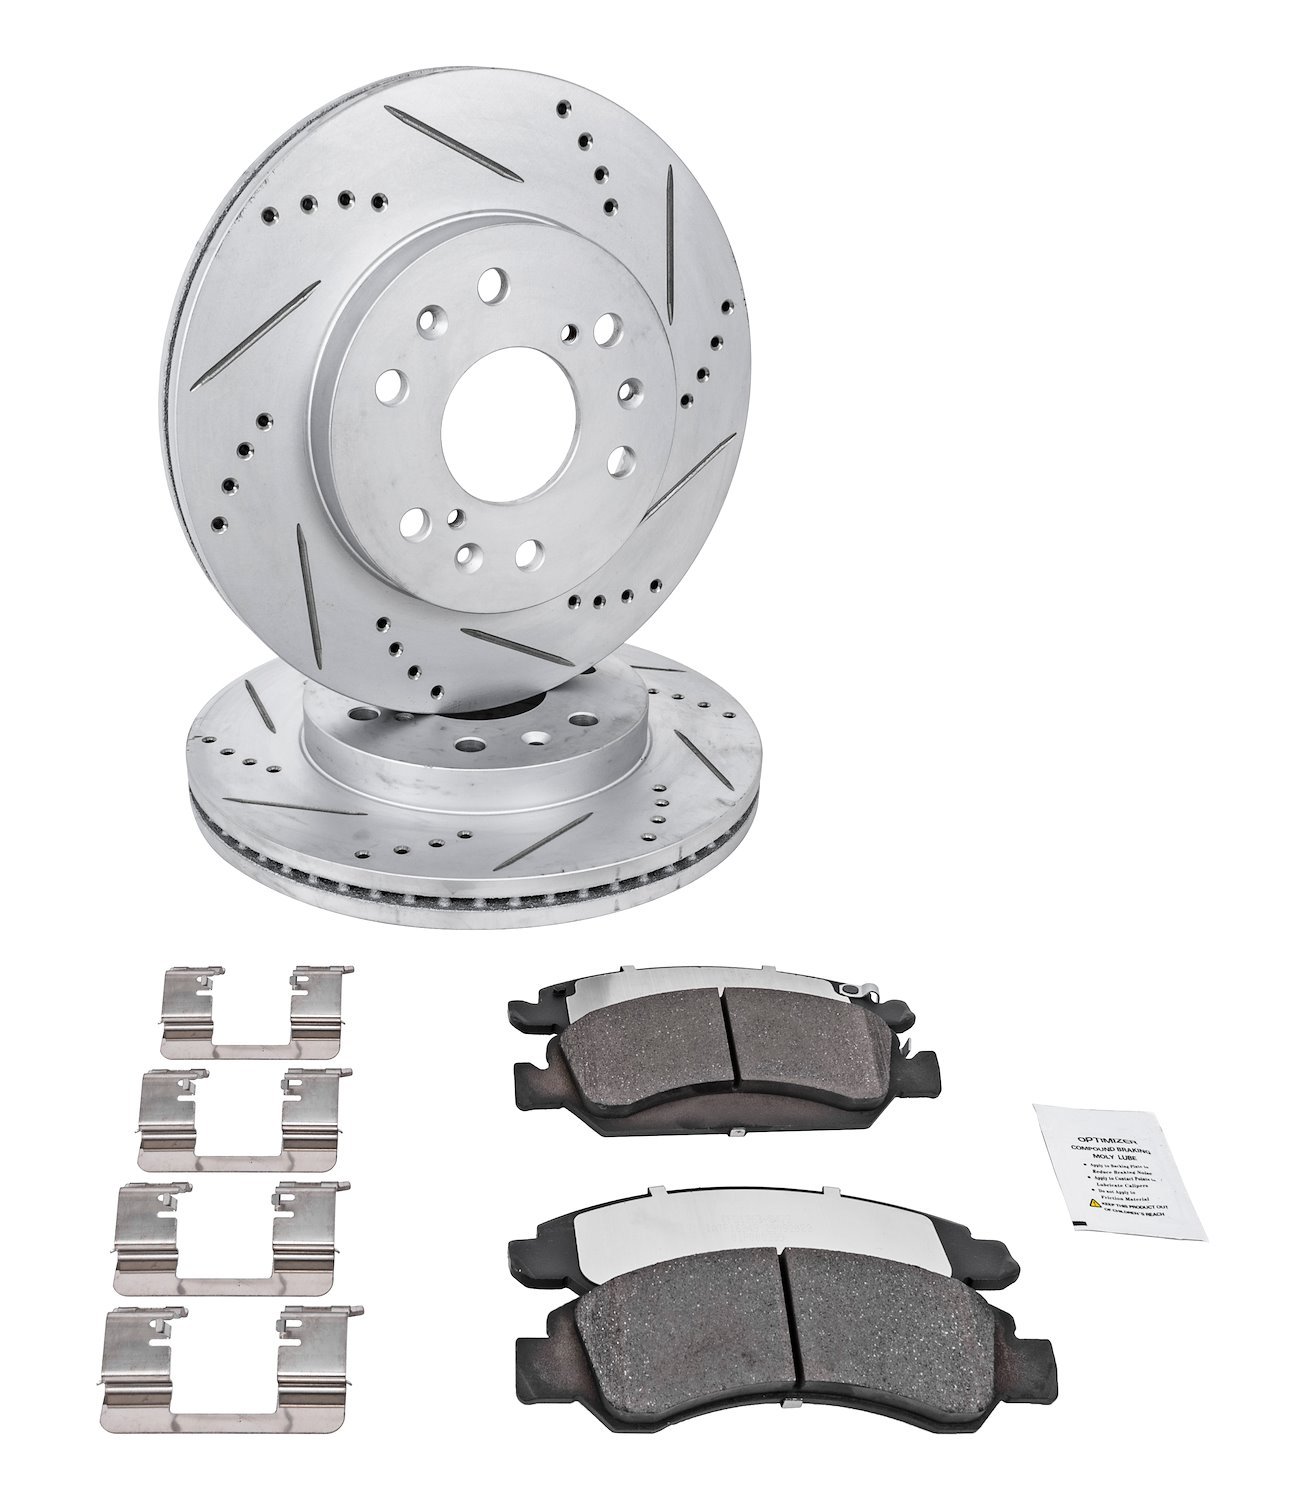 Truck-N-Tow JX25 Brake Pads & Rotors Kit Fits Select 2007-2020 Cadillac Escalade, Chevrolet & GMC Trucks [Front]